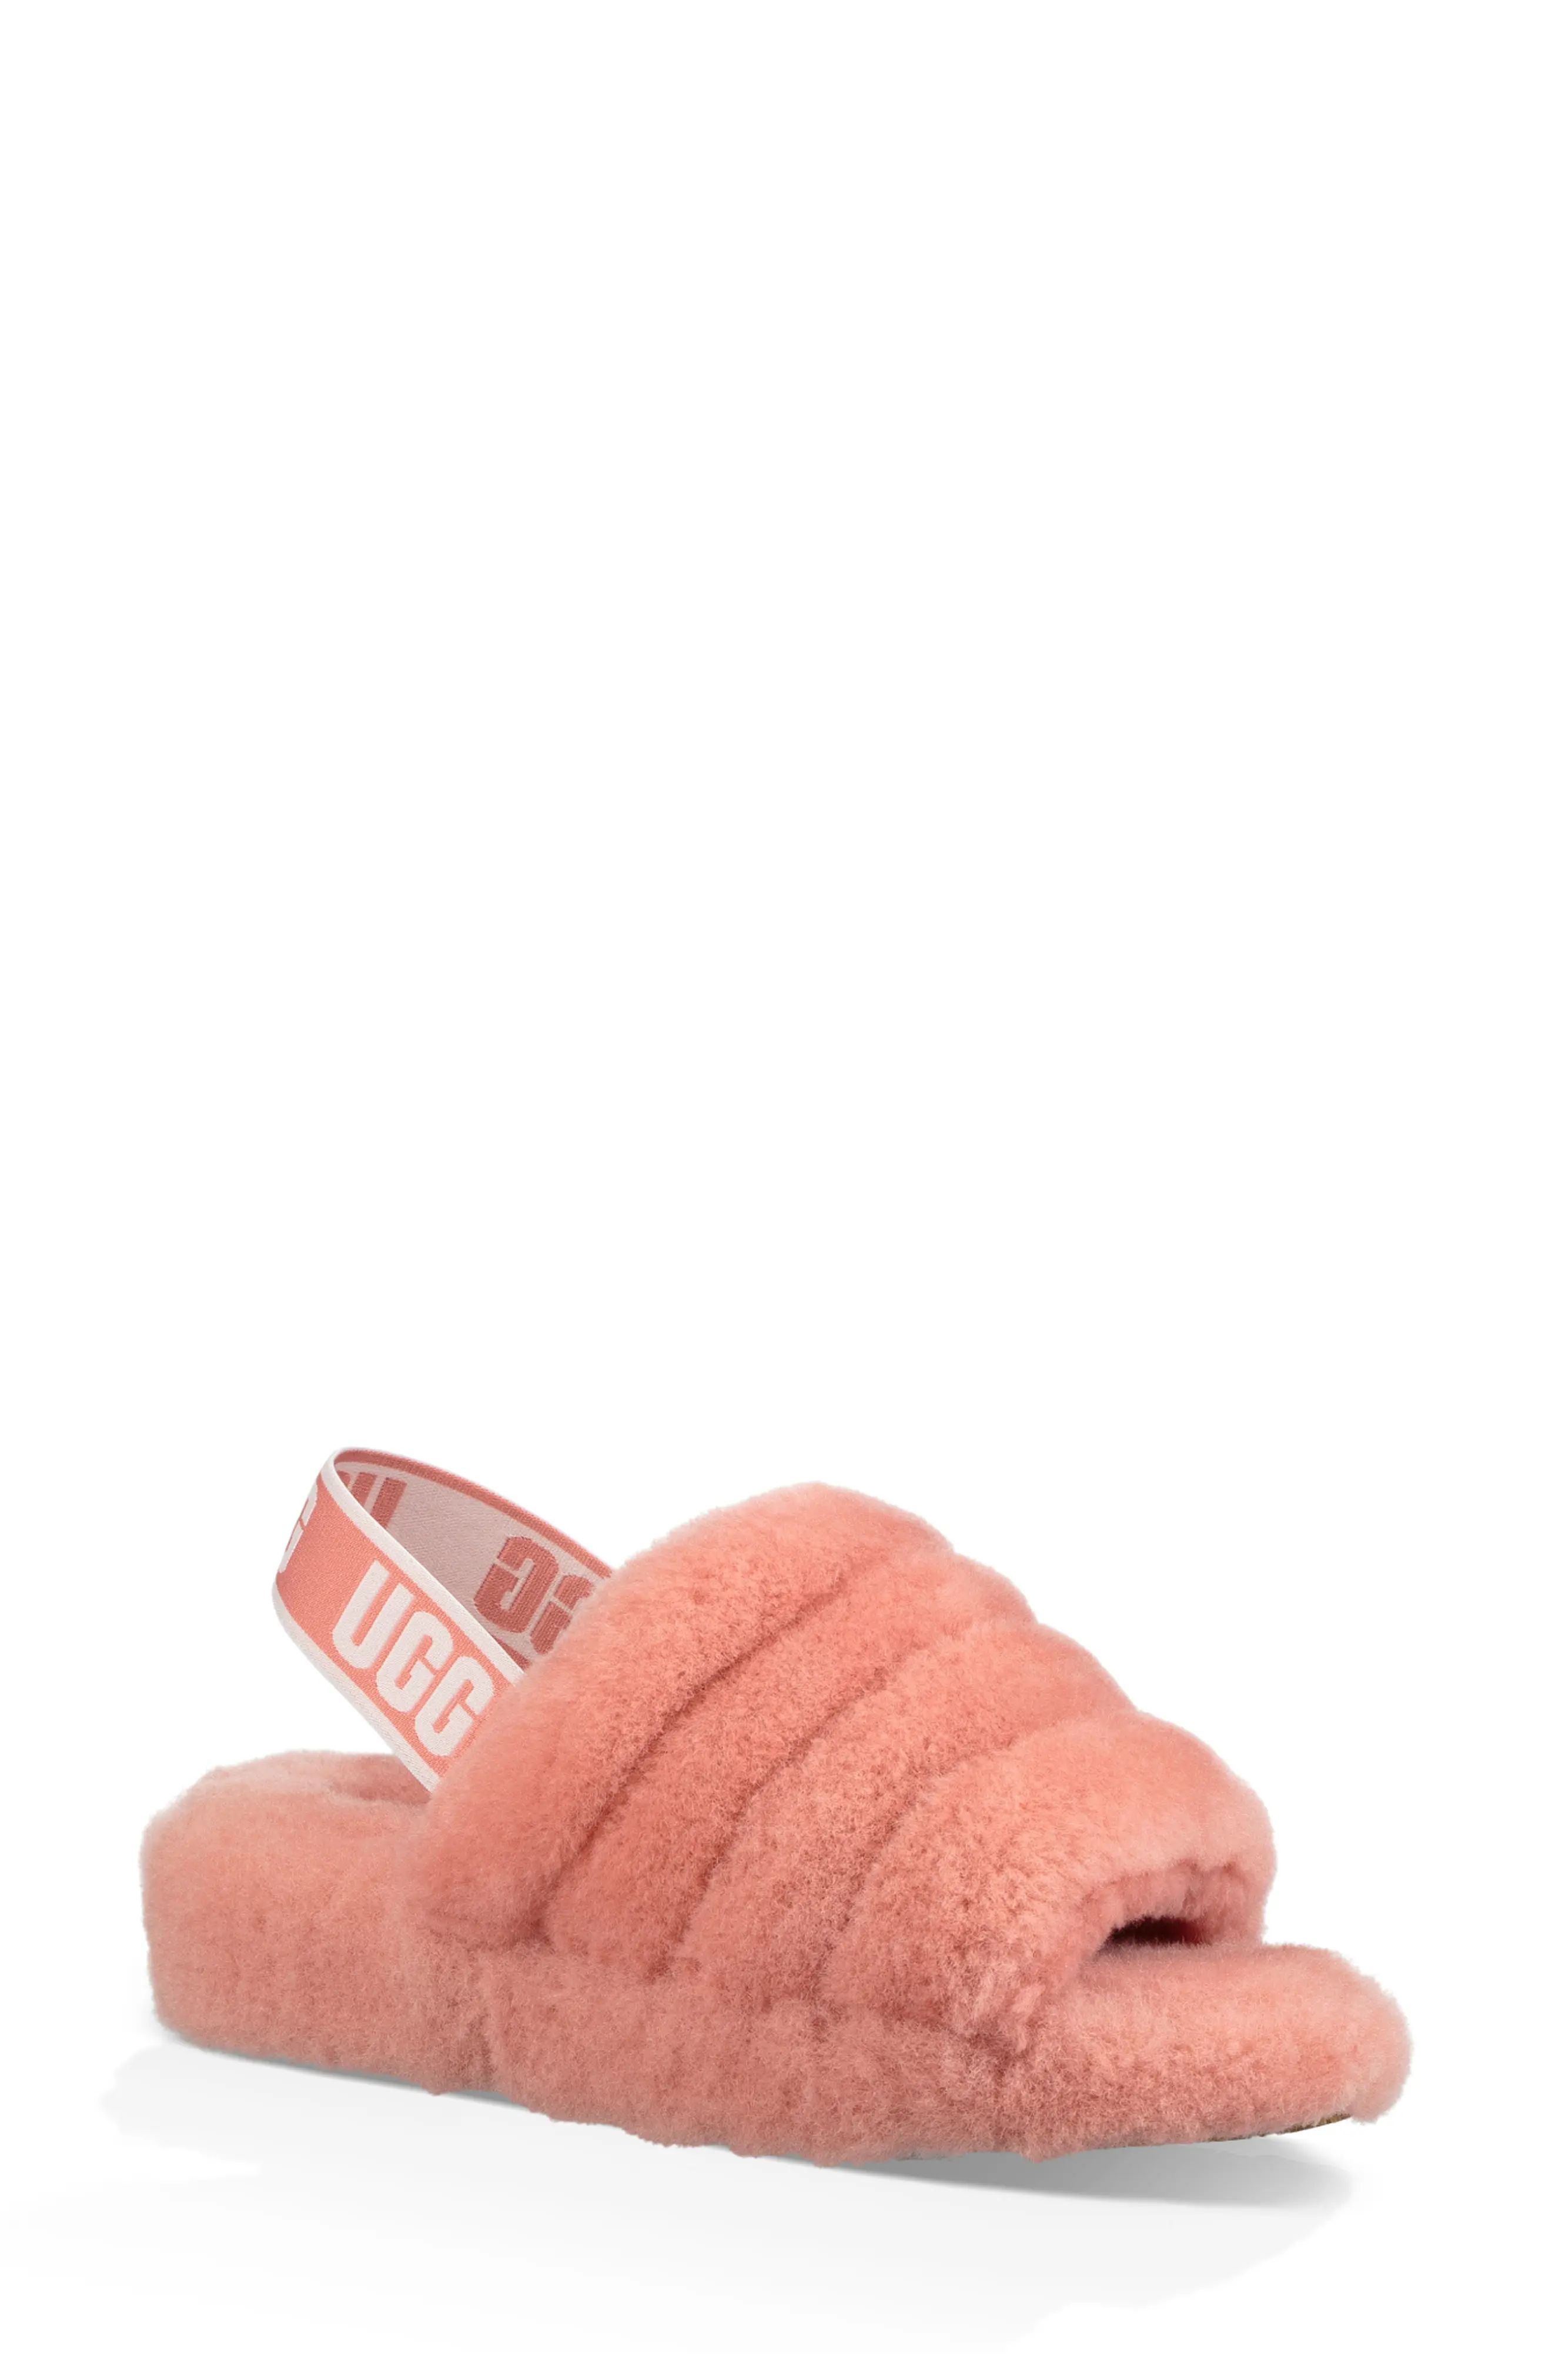 Women's Ugg Fluff Yeah Genuine Shearling Slipper, Size 9 M - Pink | Nordstrom